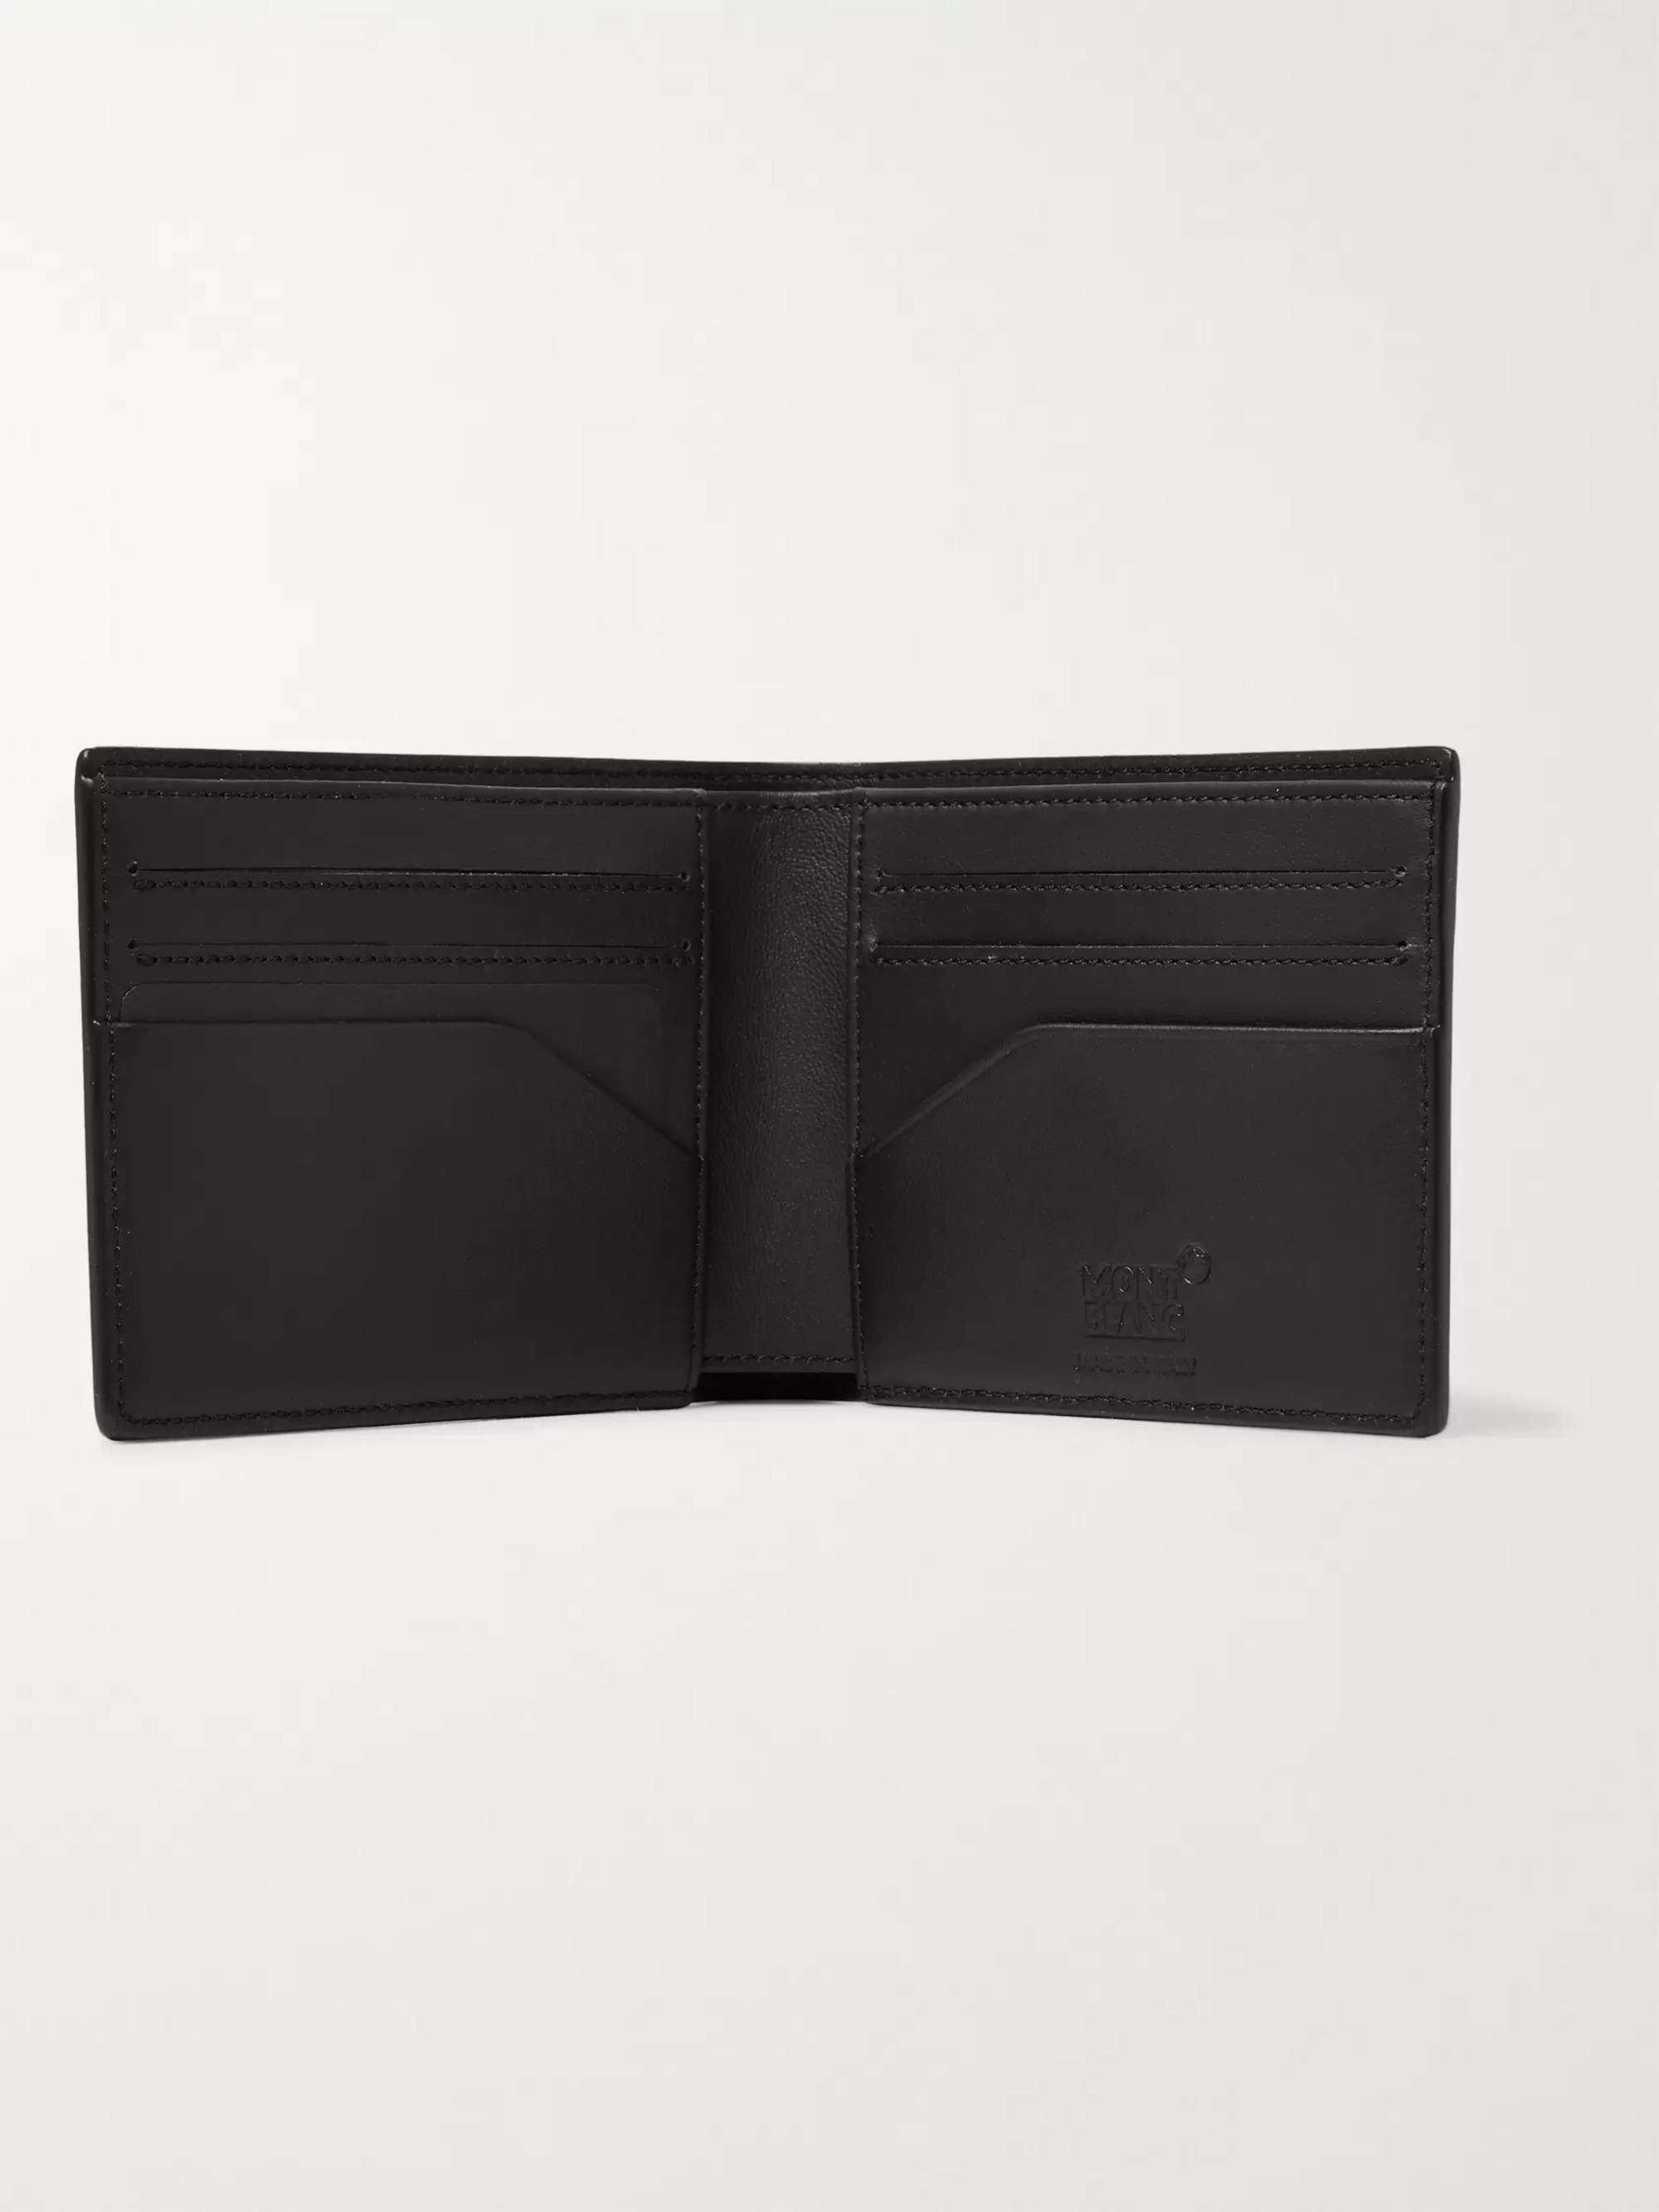 MONTBLANC Extreme 2.0 Textured-Leather Billfold Wallet